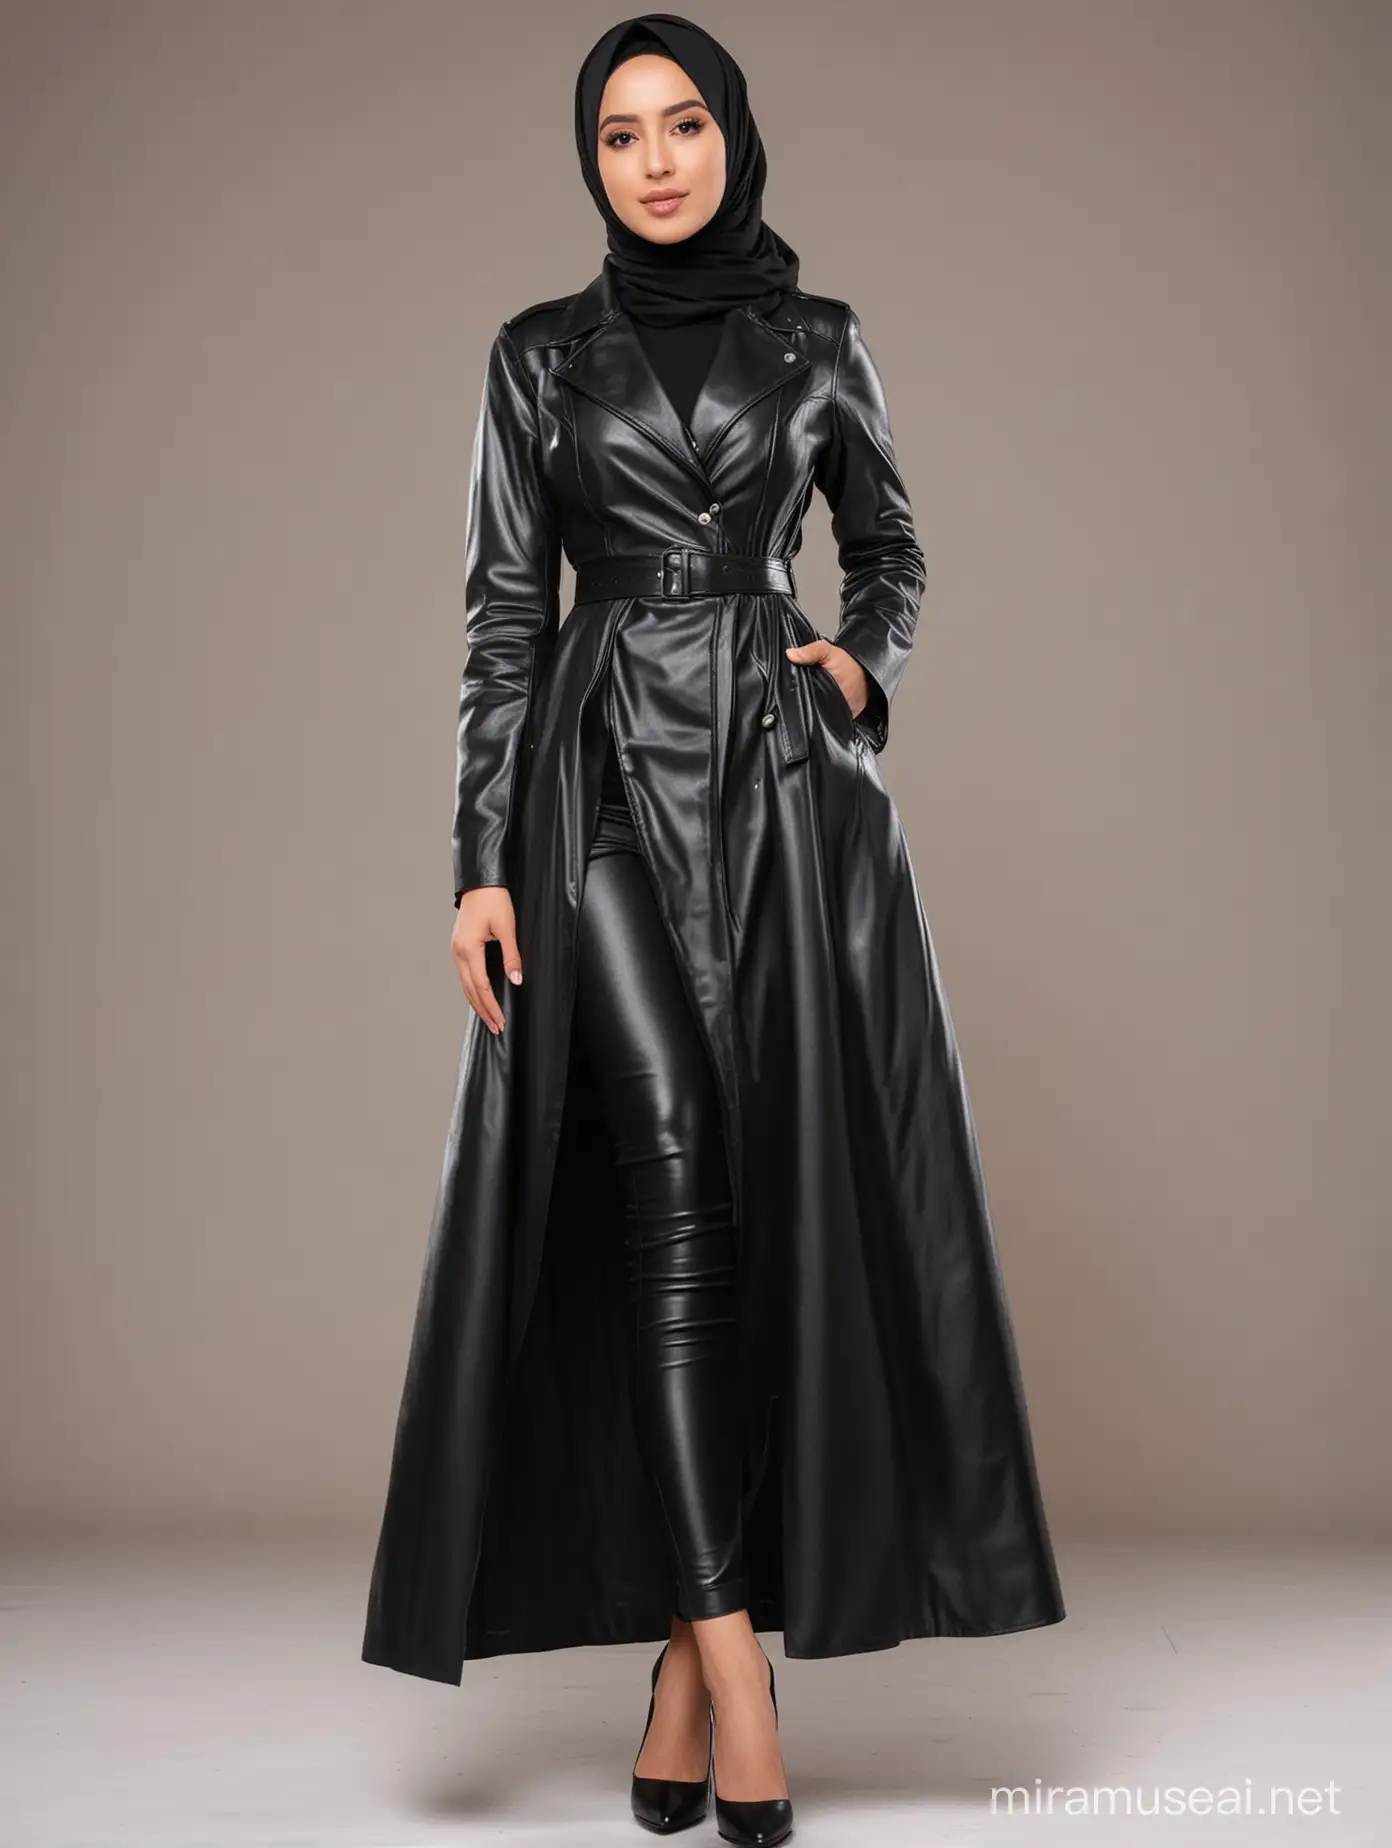 Elegant Hijab Woman in Long Black Leather Coat